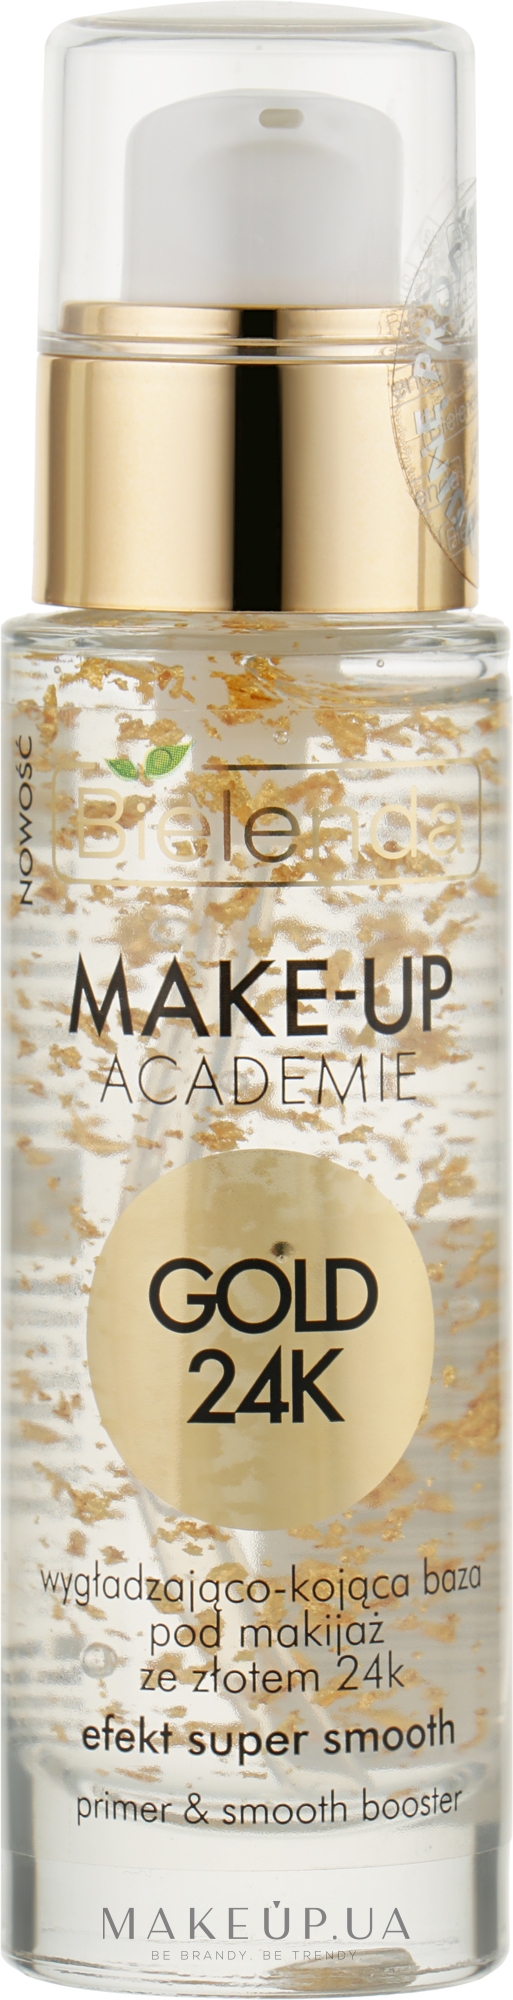 База під макіяж, золота - Bielenda Make-Up Academie Gold 24K Primer & Smooth Booster — фото 30g